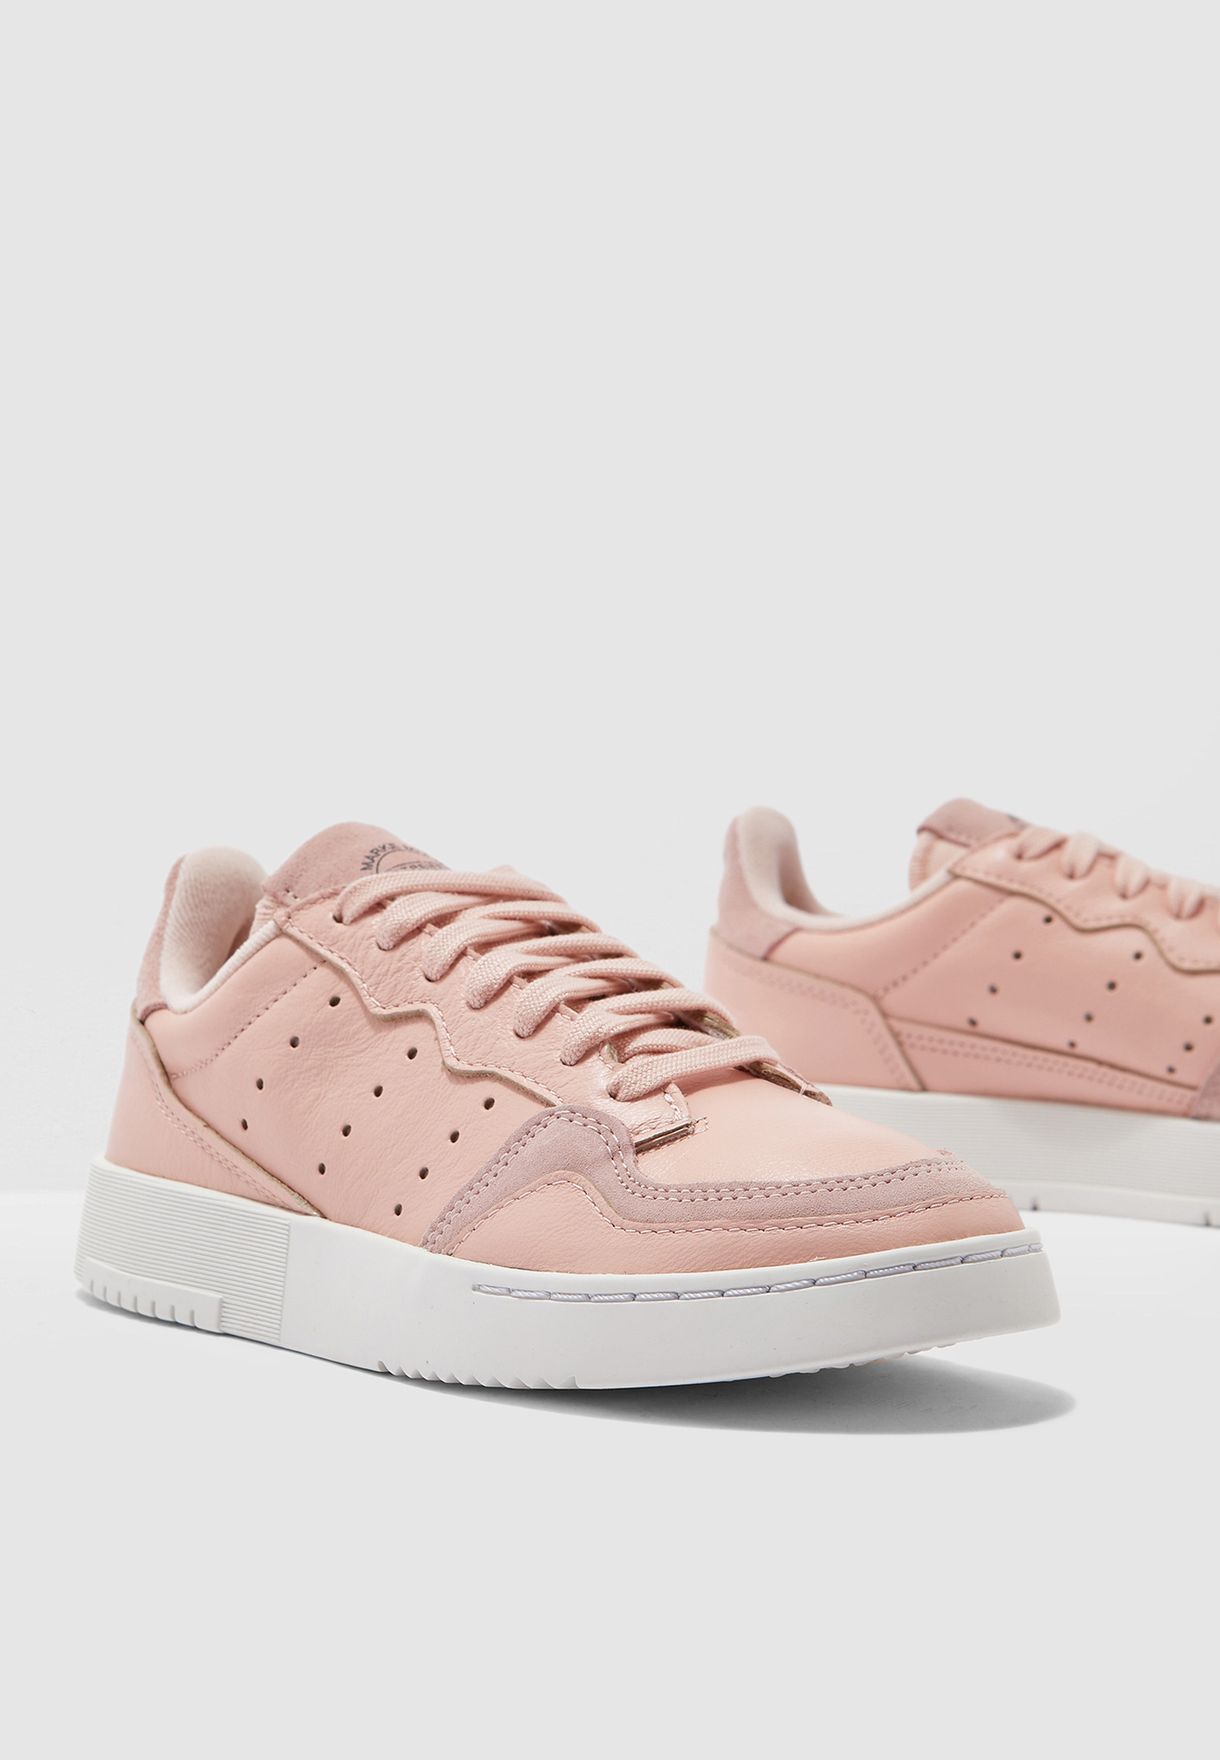 supercourt adidas pink